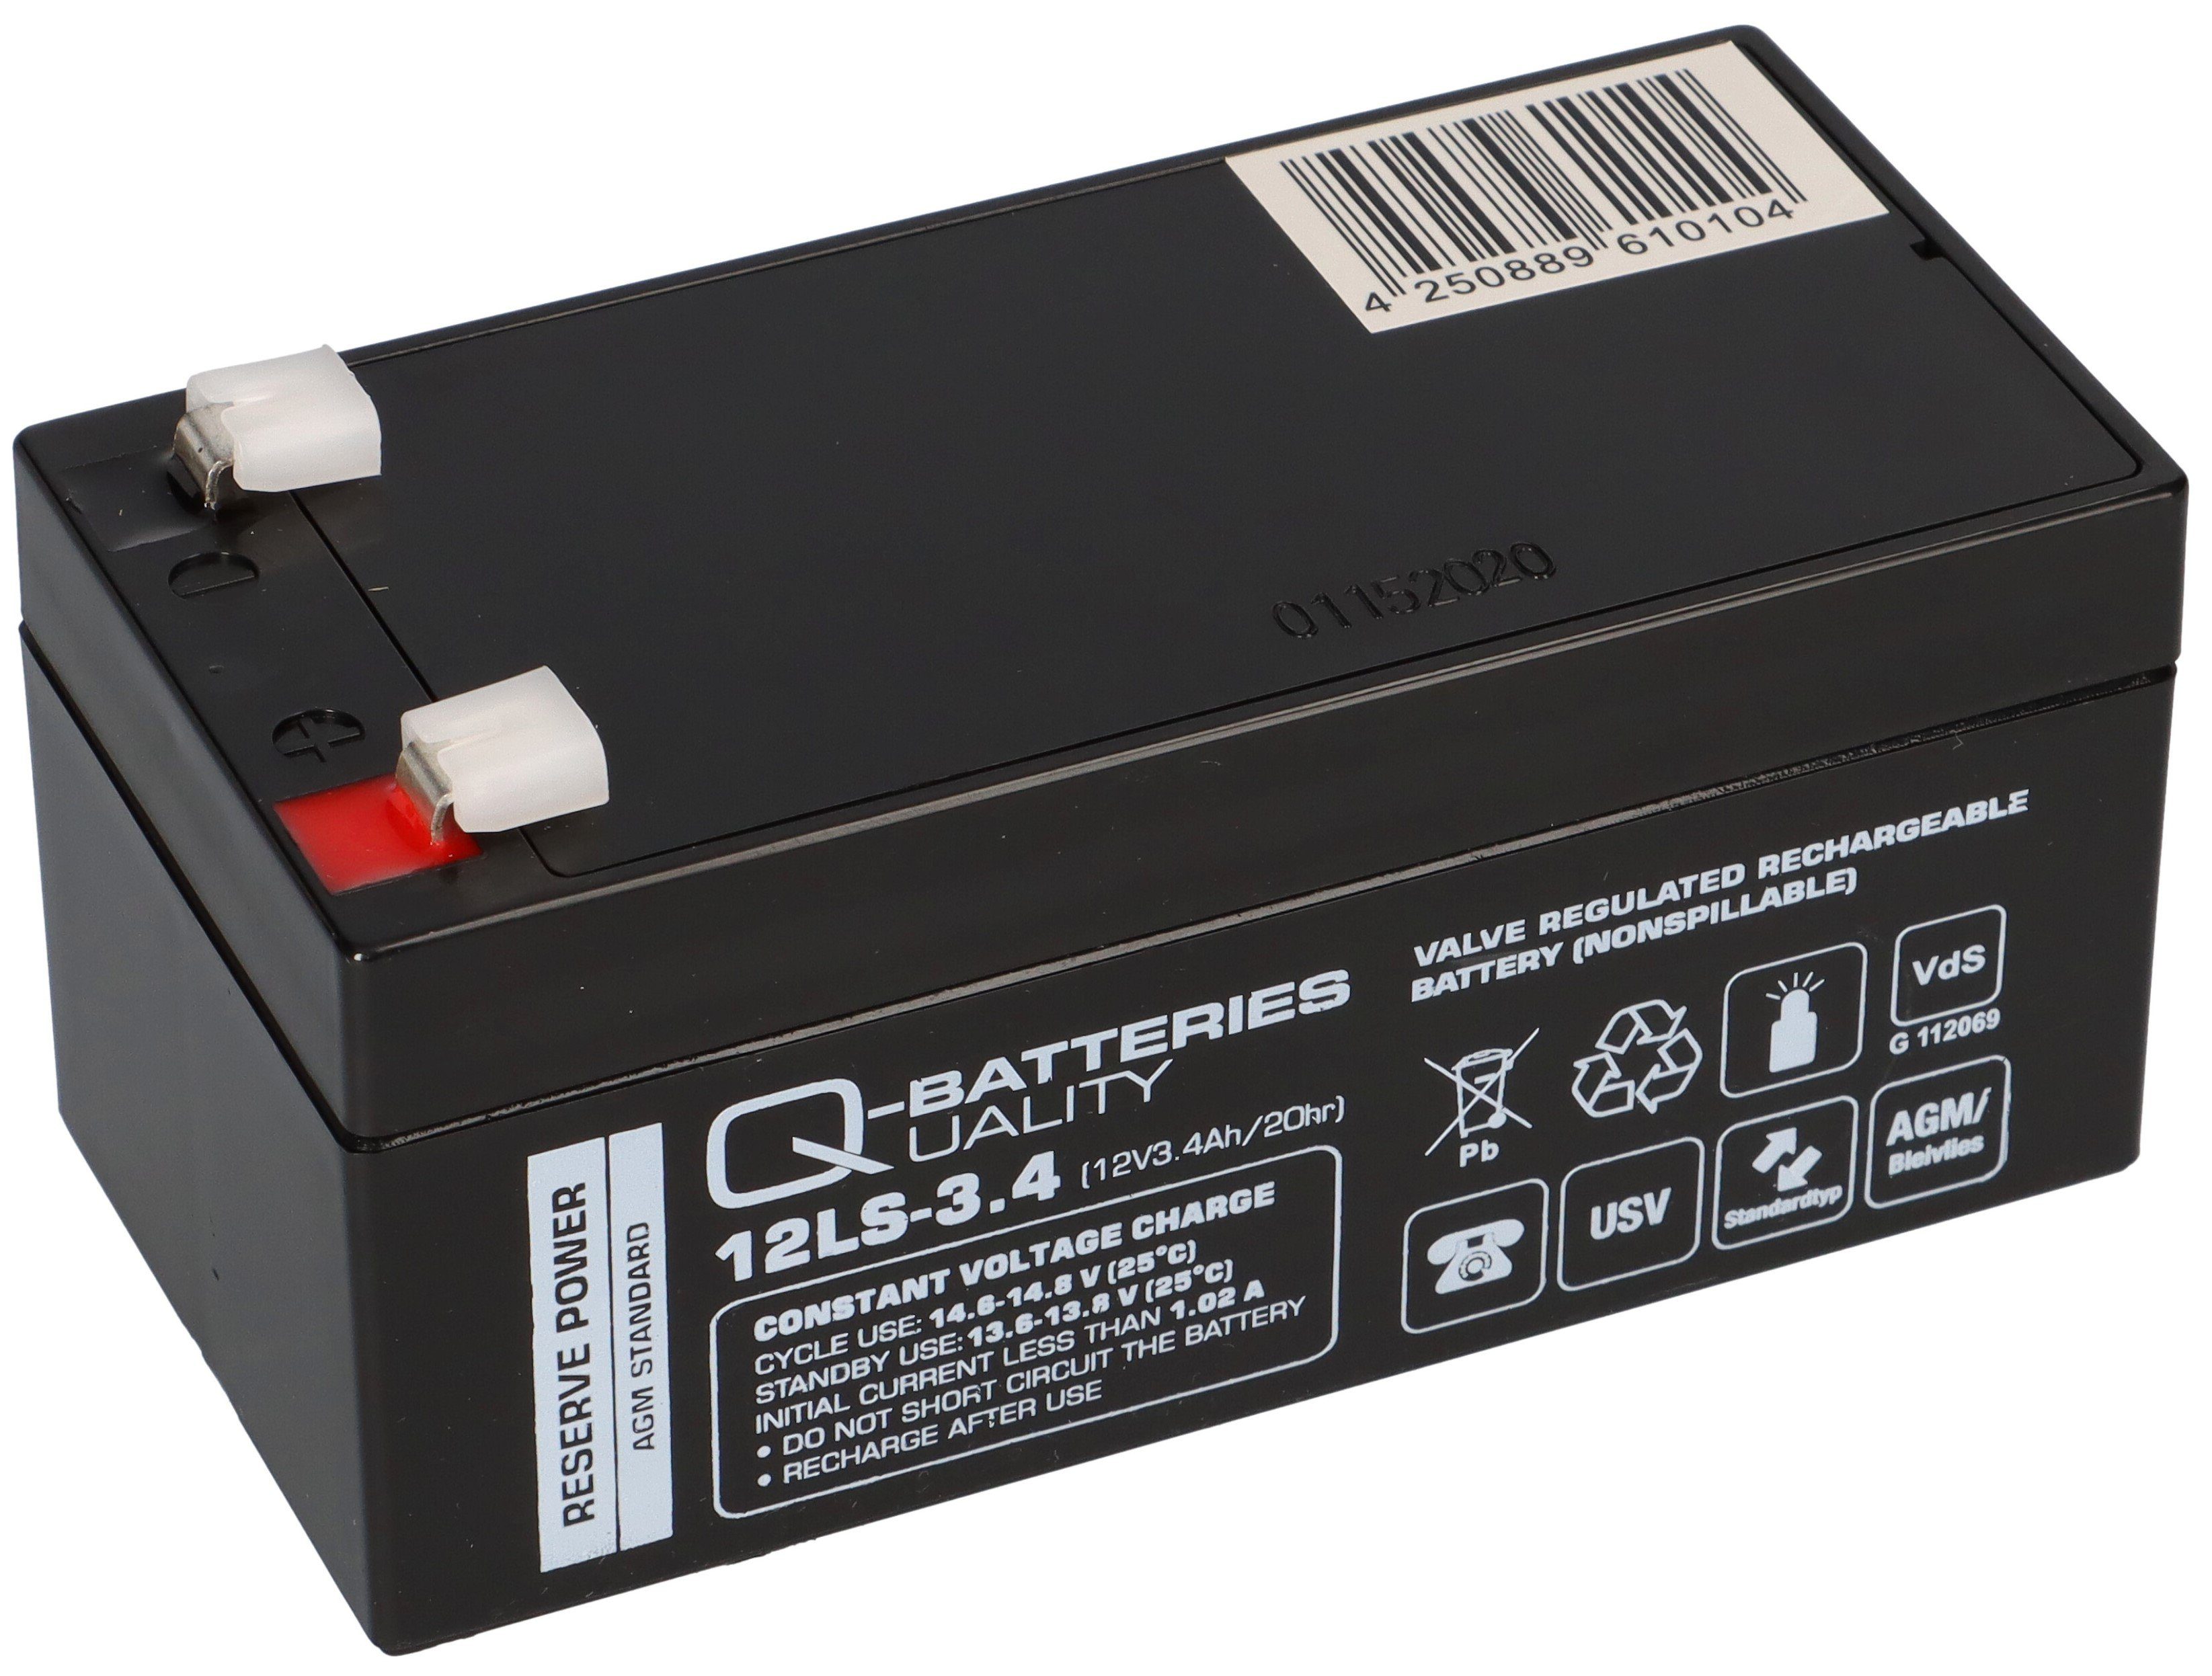 Q-Batteries Bleiakkus 3,4Ah mit / 12V Blei-Vlies VdS AGM VRLA 12LS-3.4 Q-Batteries Akku